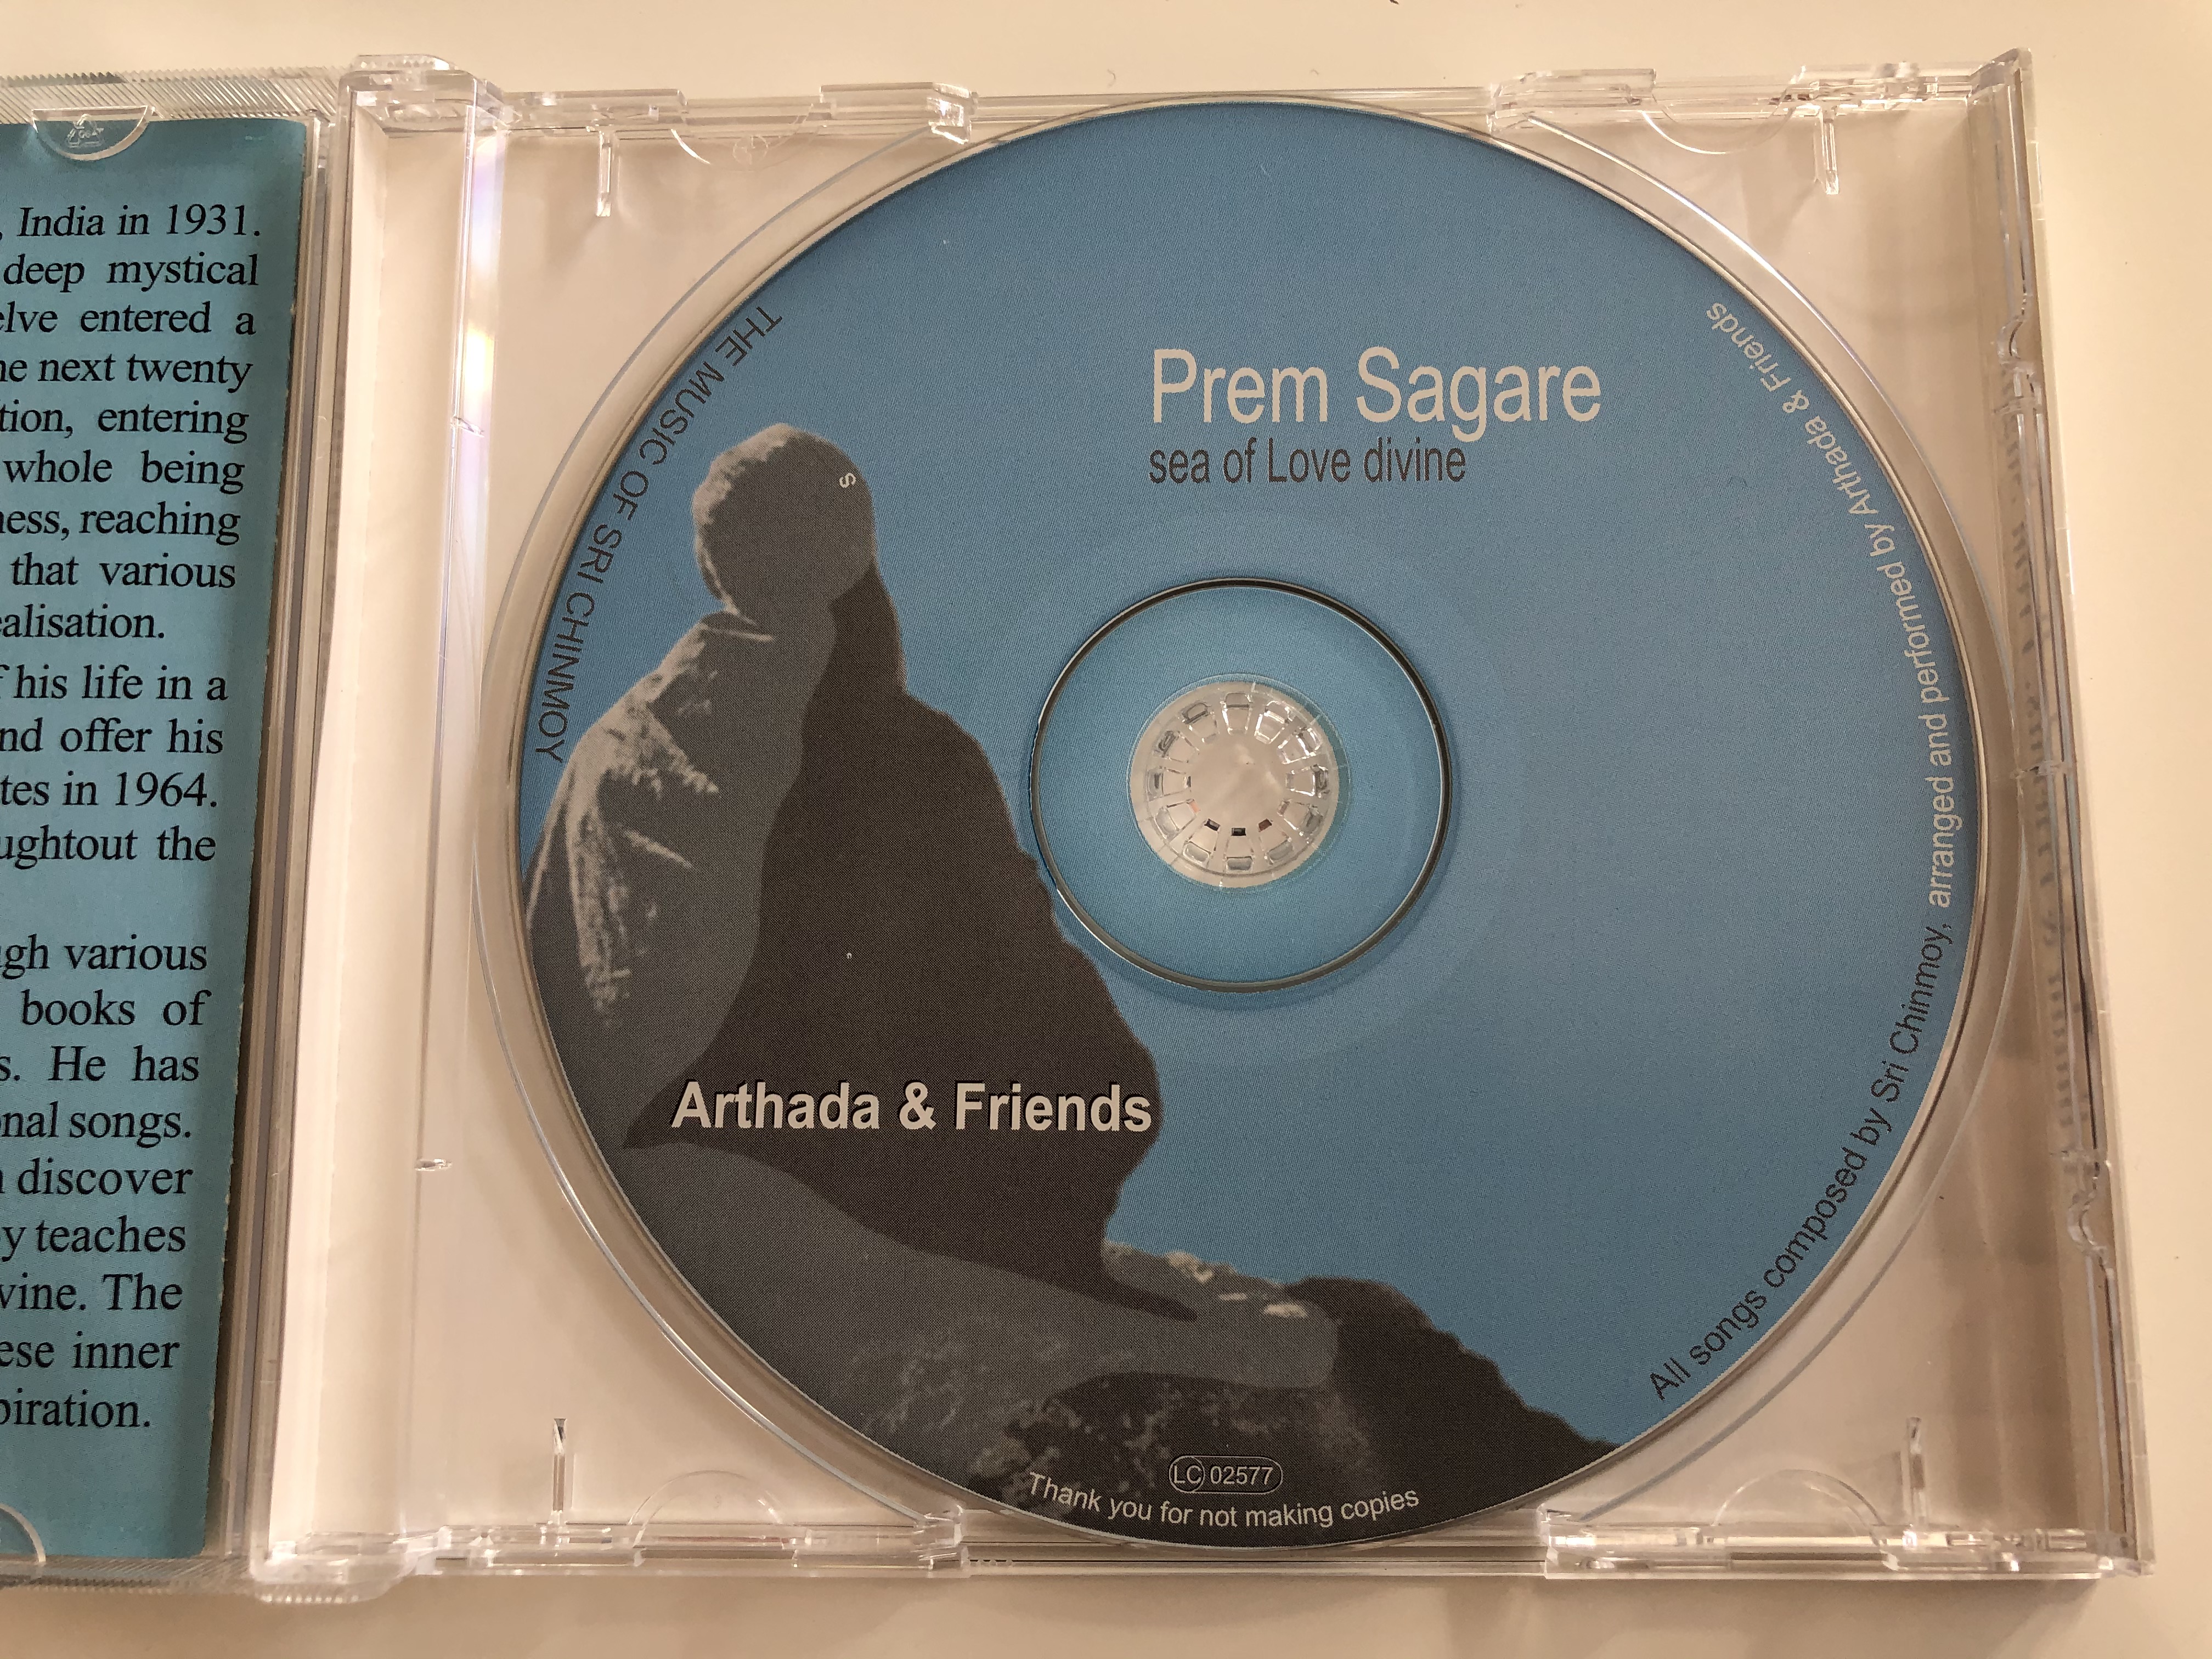 prem-sagare-sea-of-love-divine-music-composed-by-sri-chinmoy-music-for-meditation-arranged-by-arthada-friends-audio-cd-2001-4-.jpg